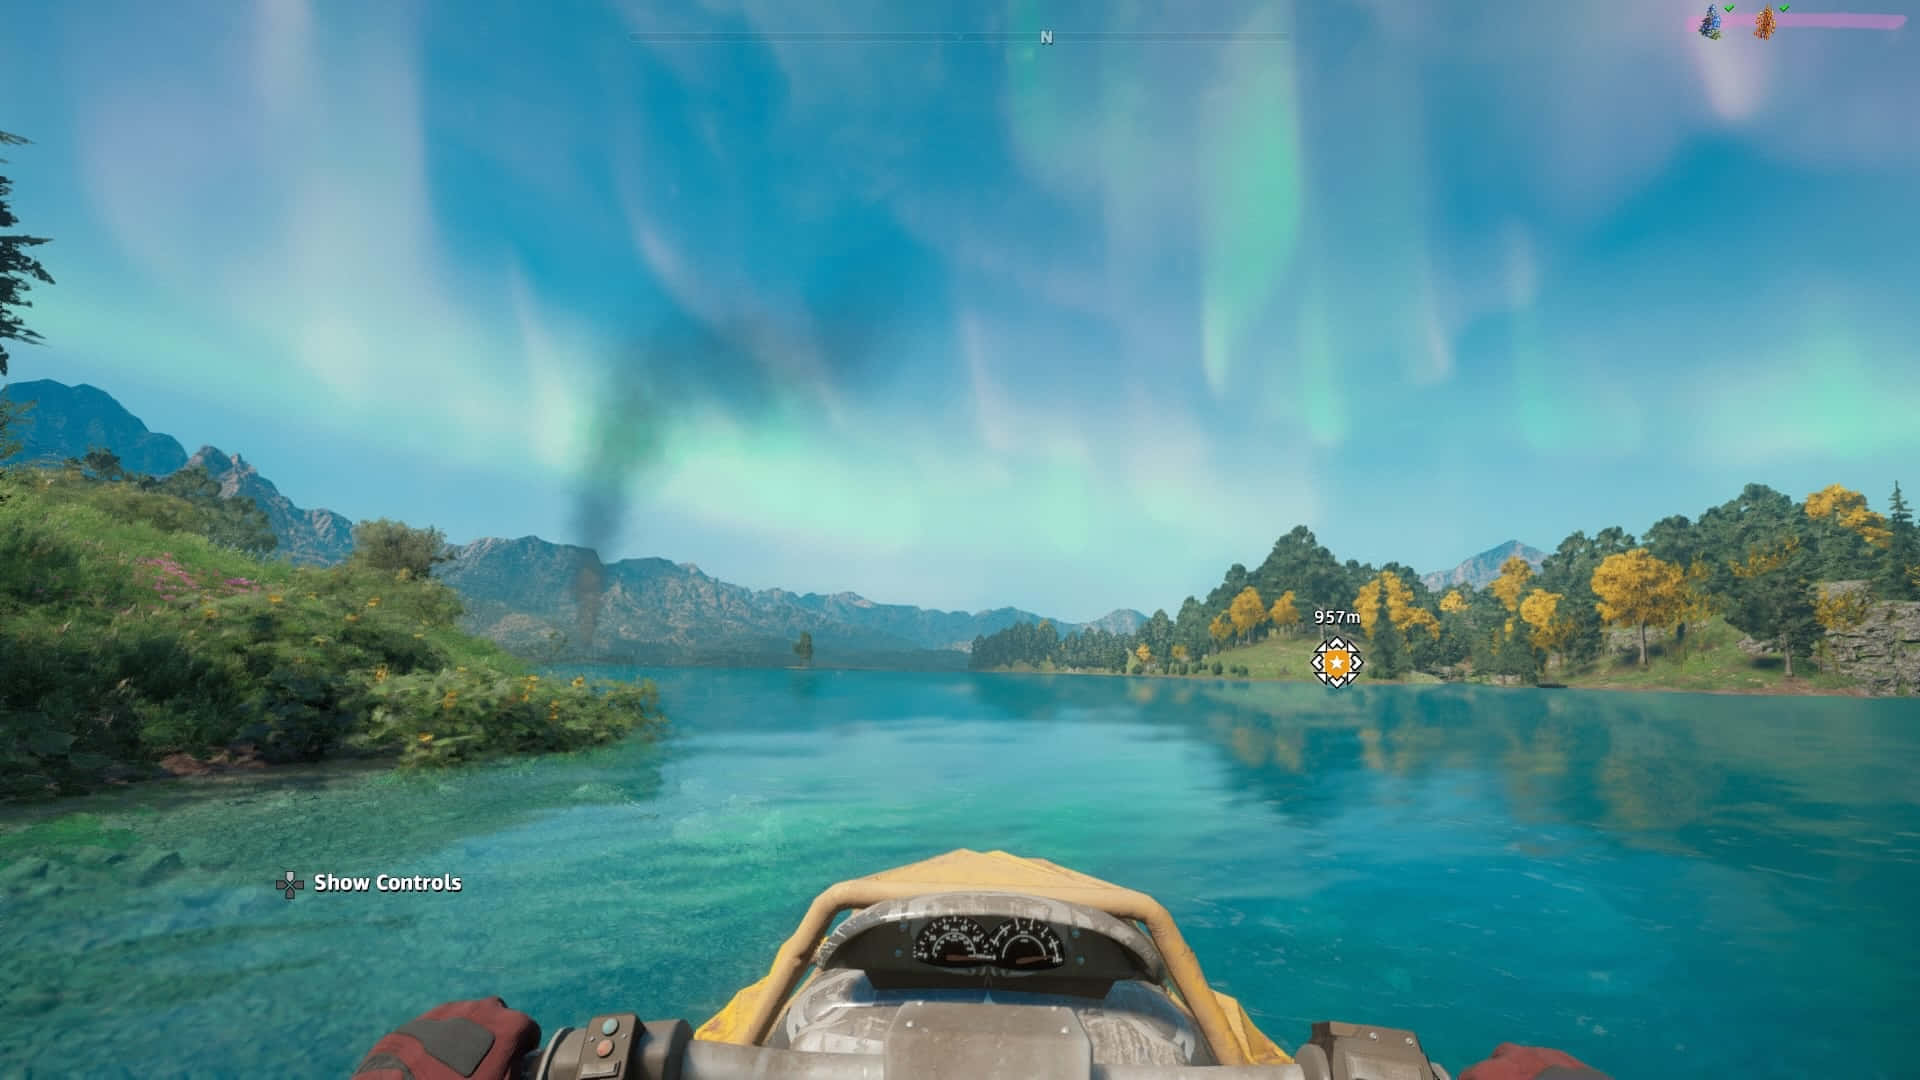 A Screenshot Of A Boat In A Lake